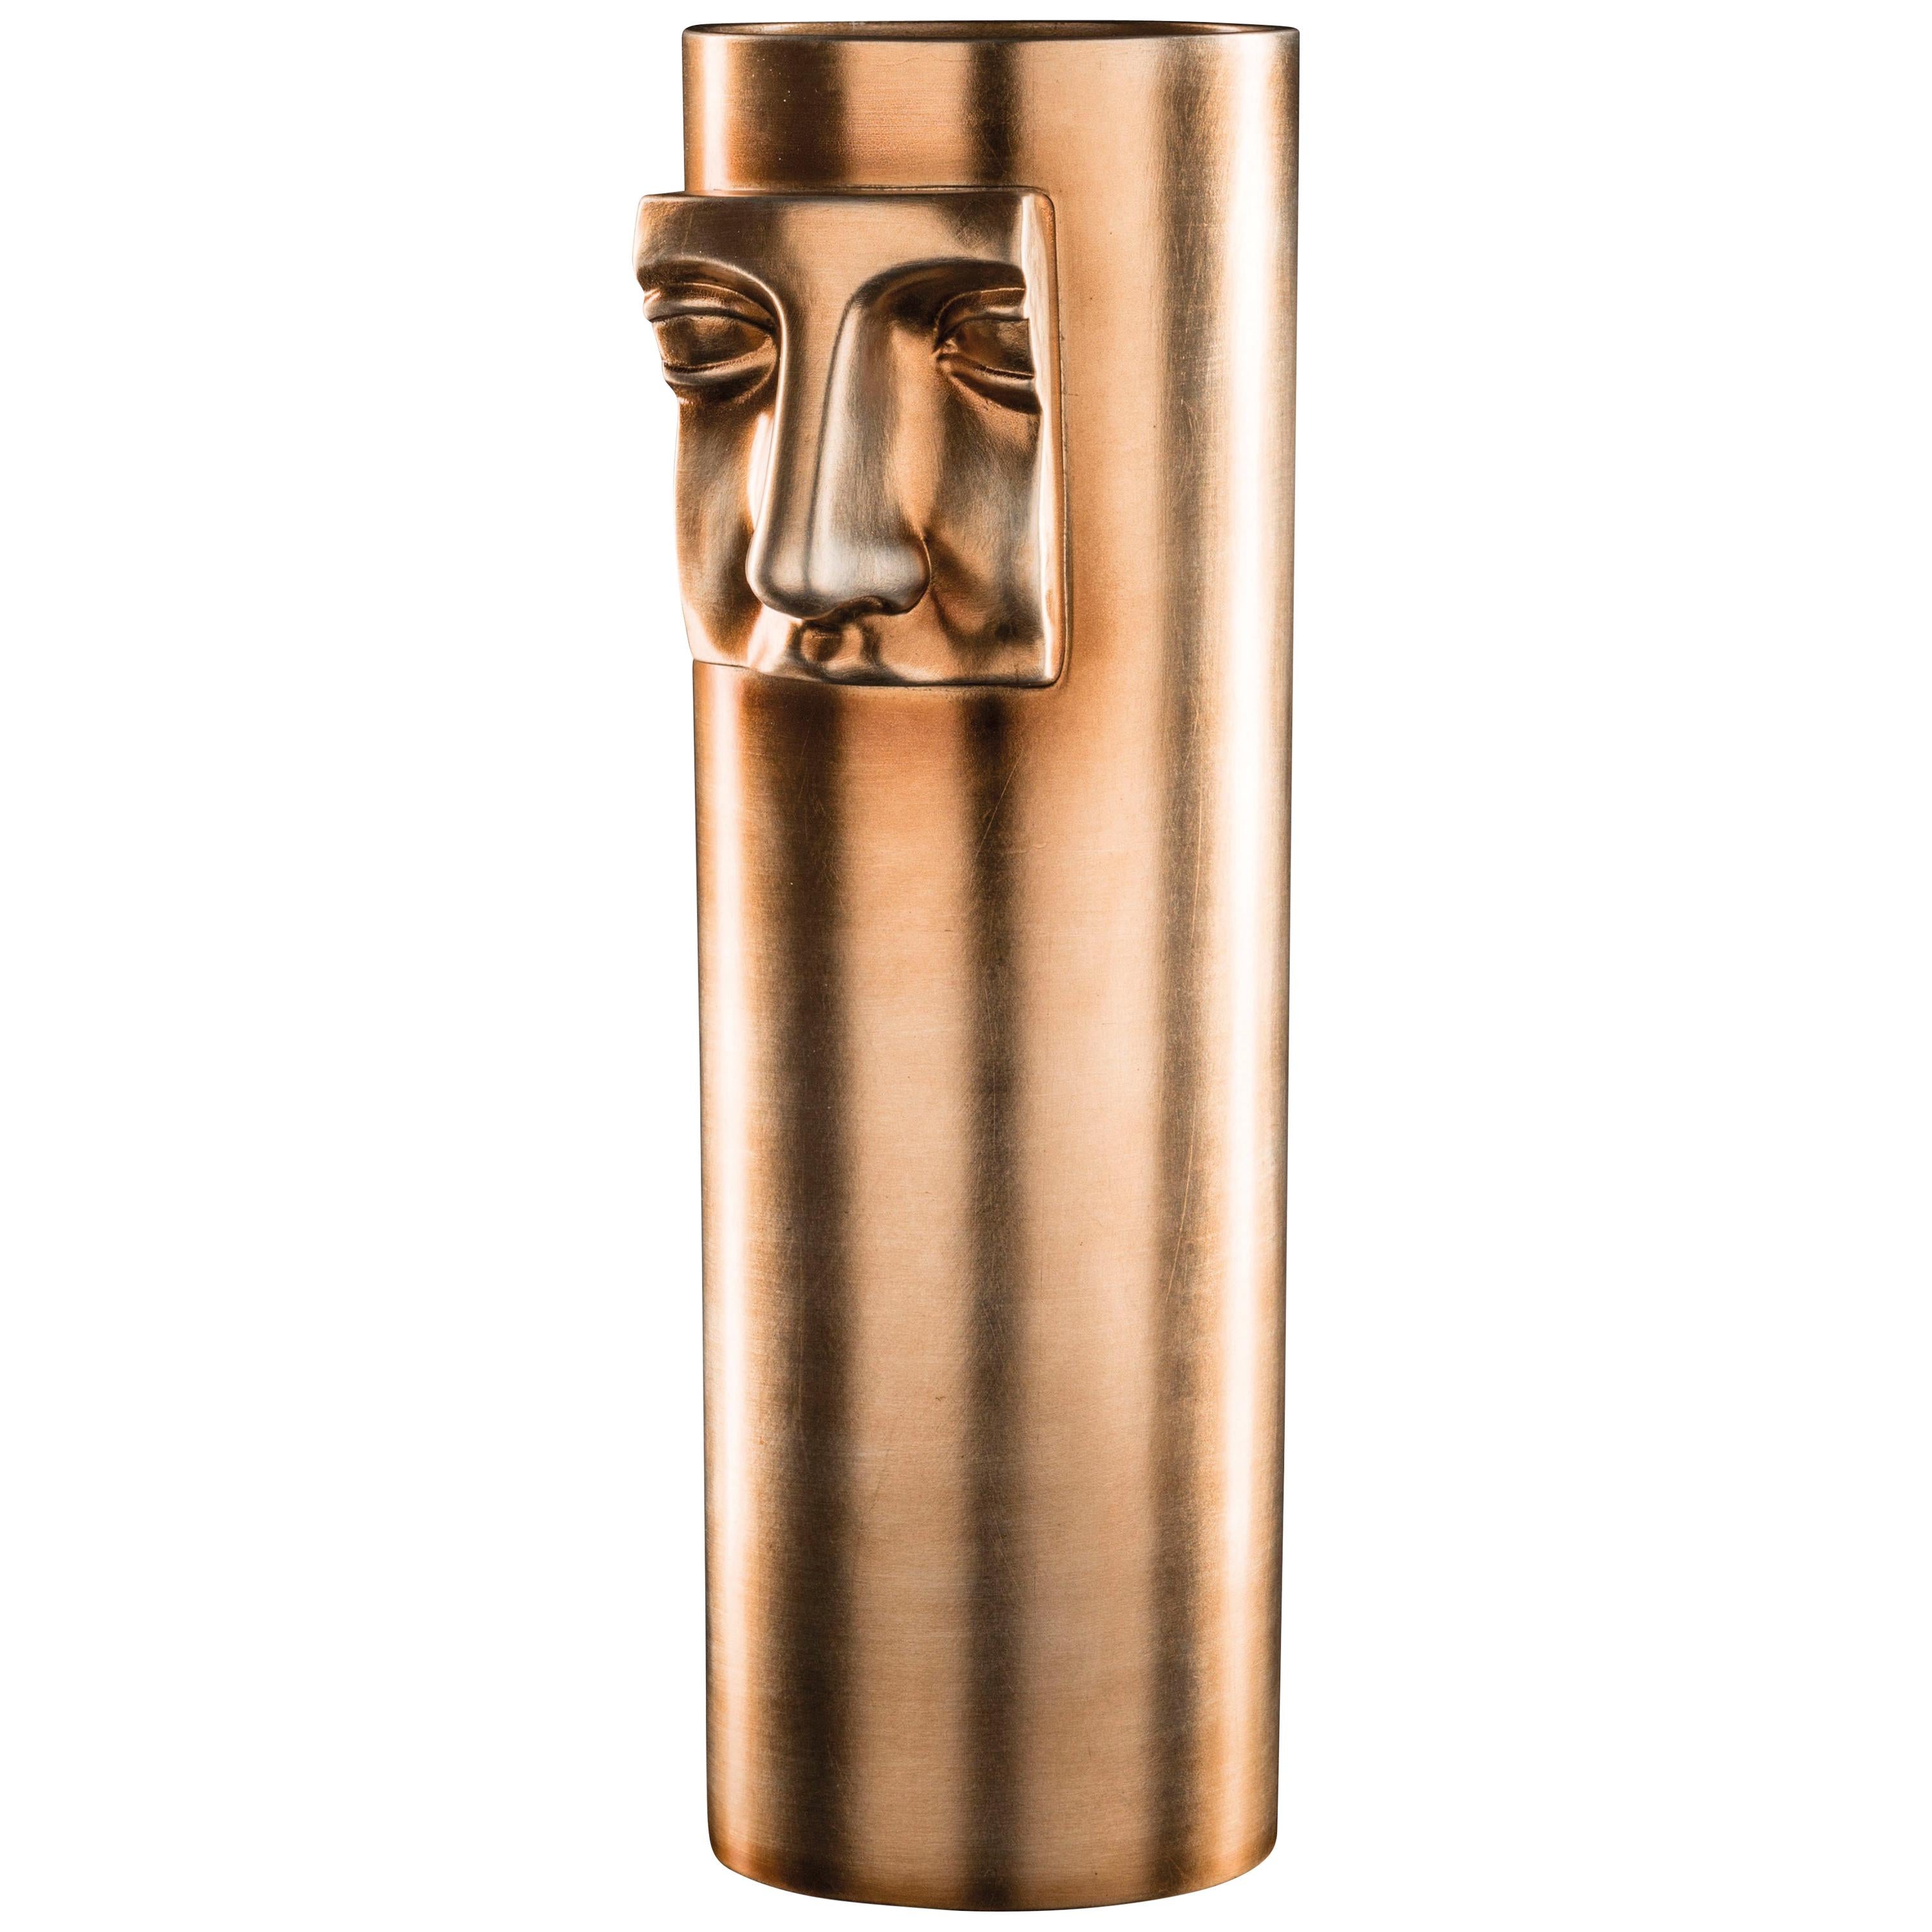 Vase Juno's Nose:: Messing Metall Finish:: Keramik:: Italien